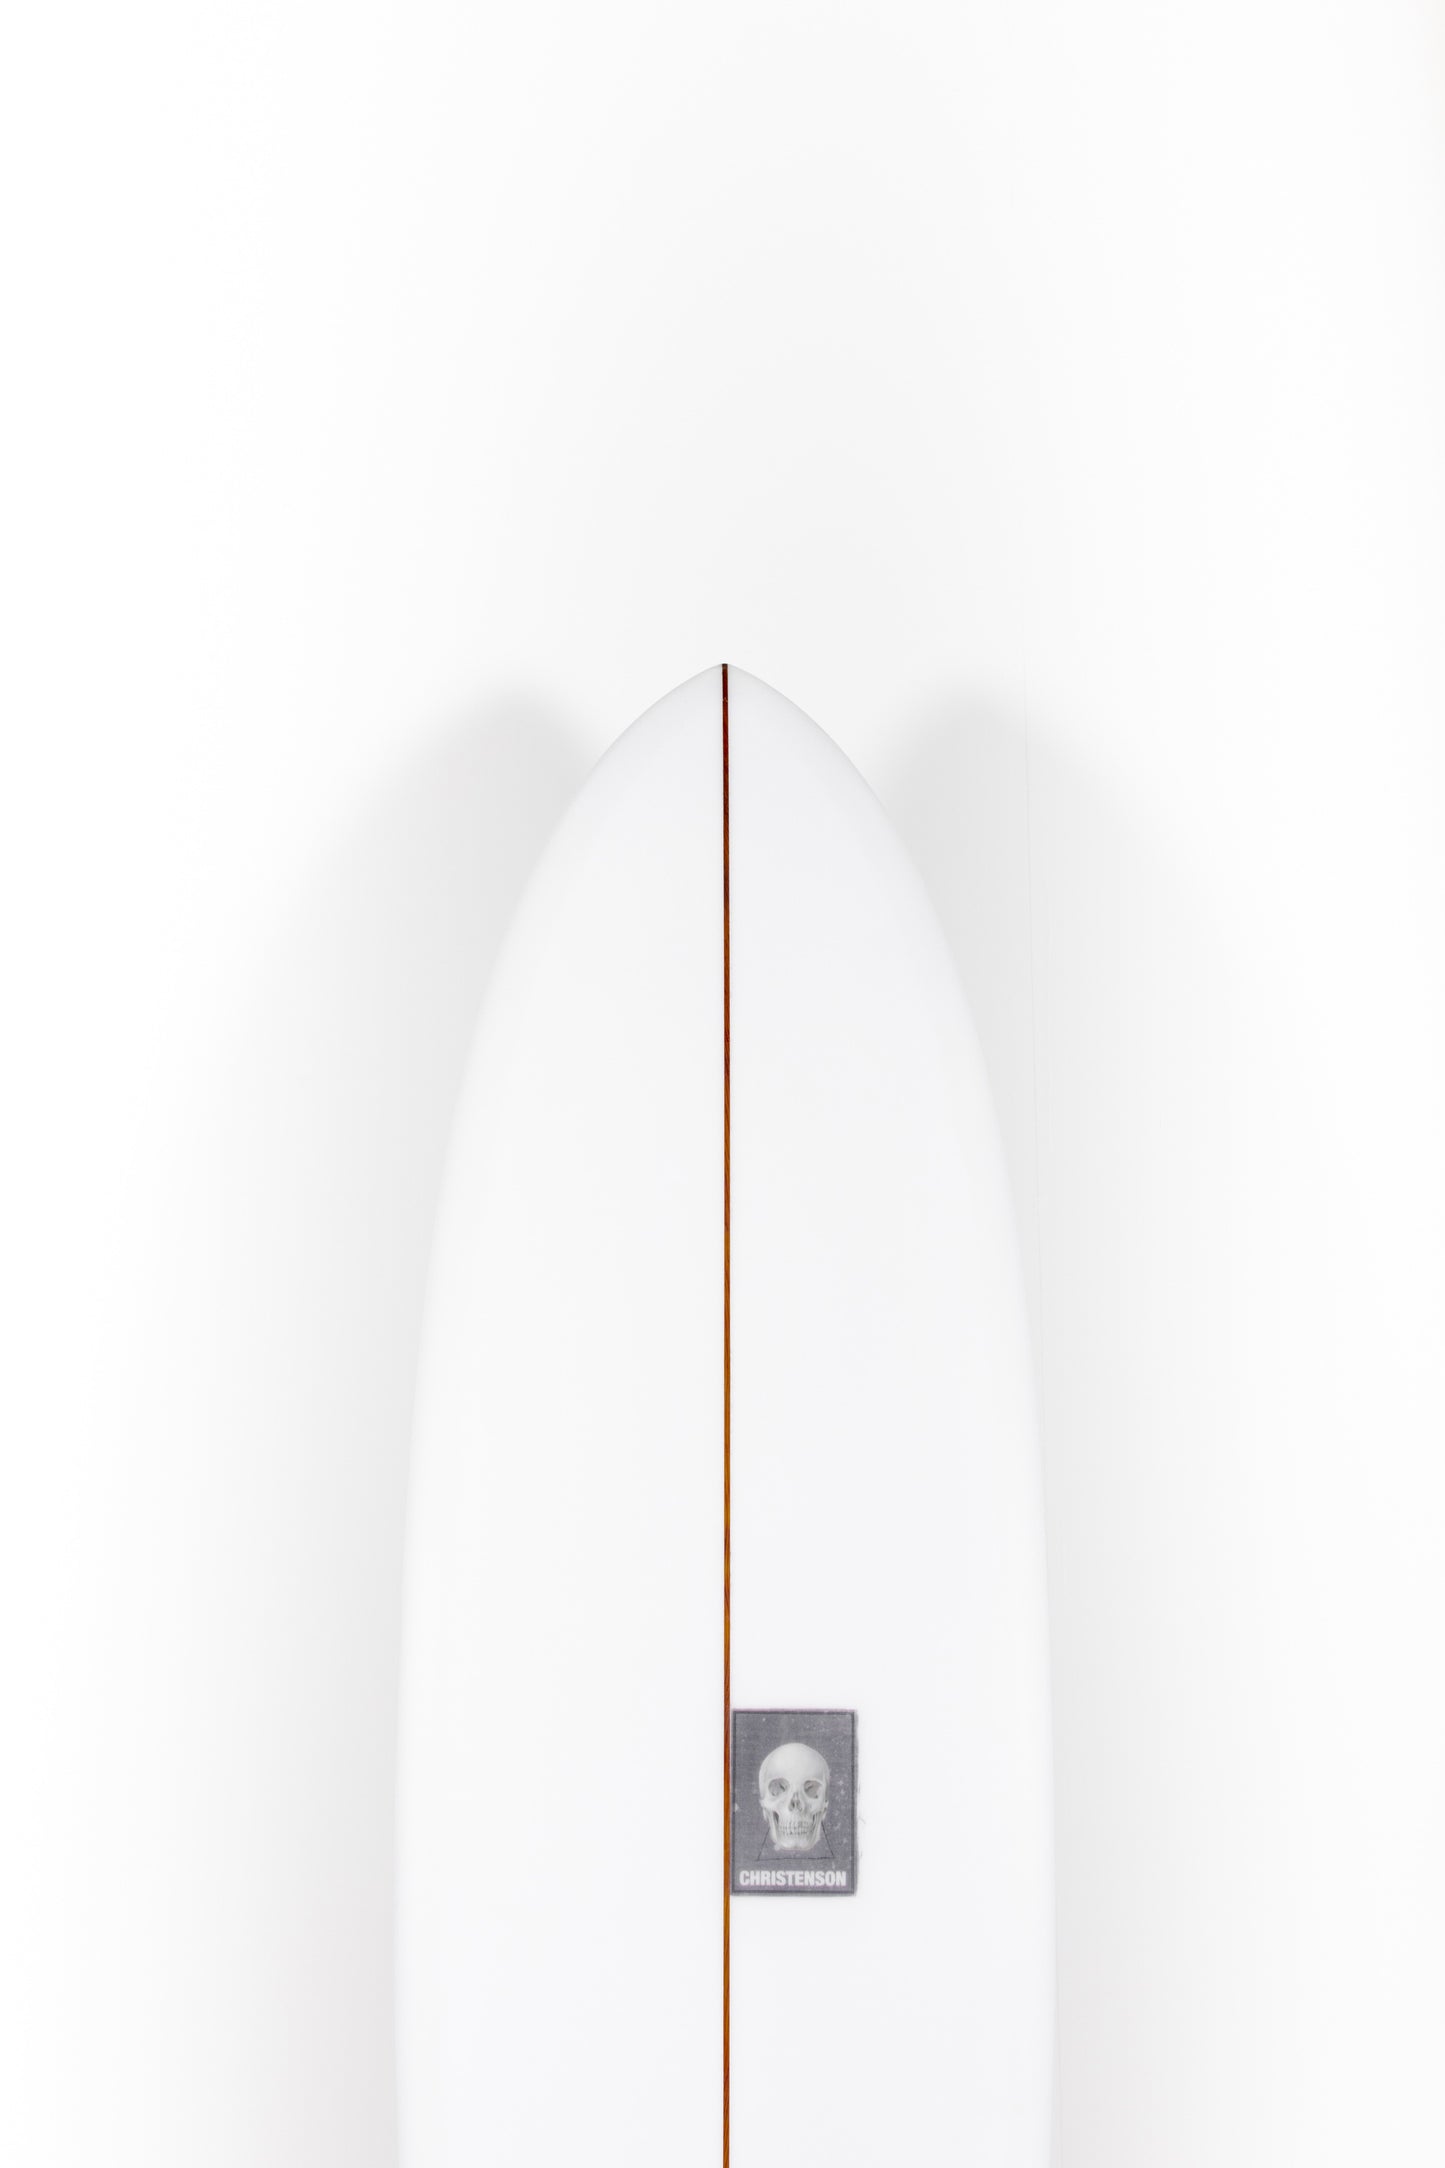 
                  
                    Pukas Surf Shop - Christenson Surfboards - TWIN TRACKER - 7'2" x 21 1/4  x 2 7/8 - CX03297
                  
                